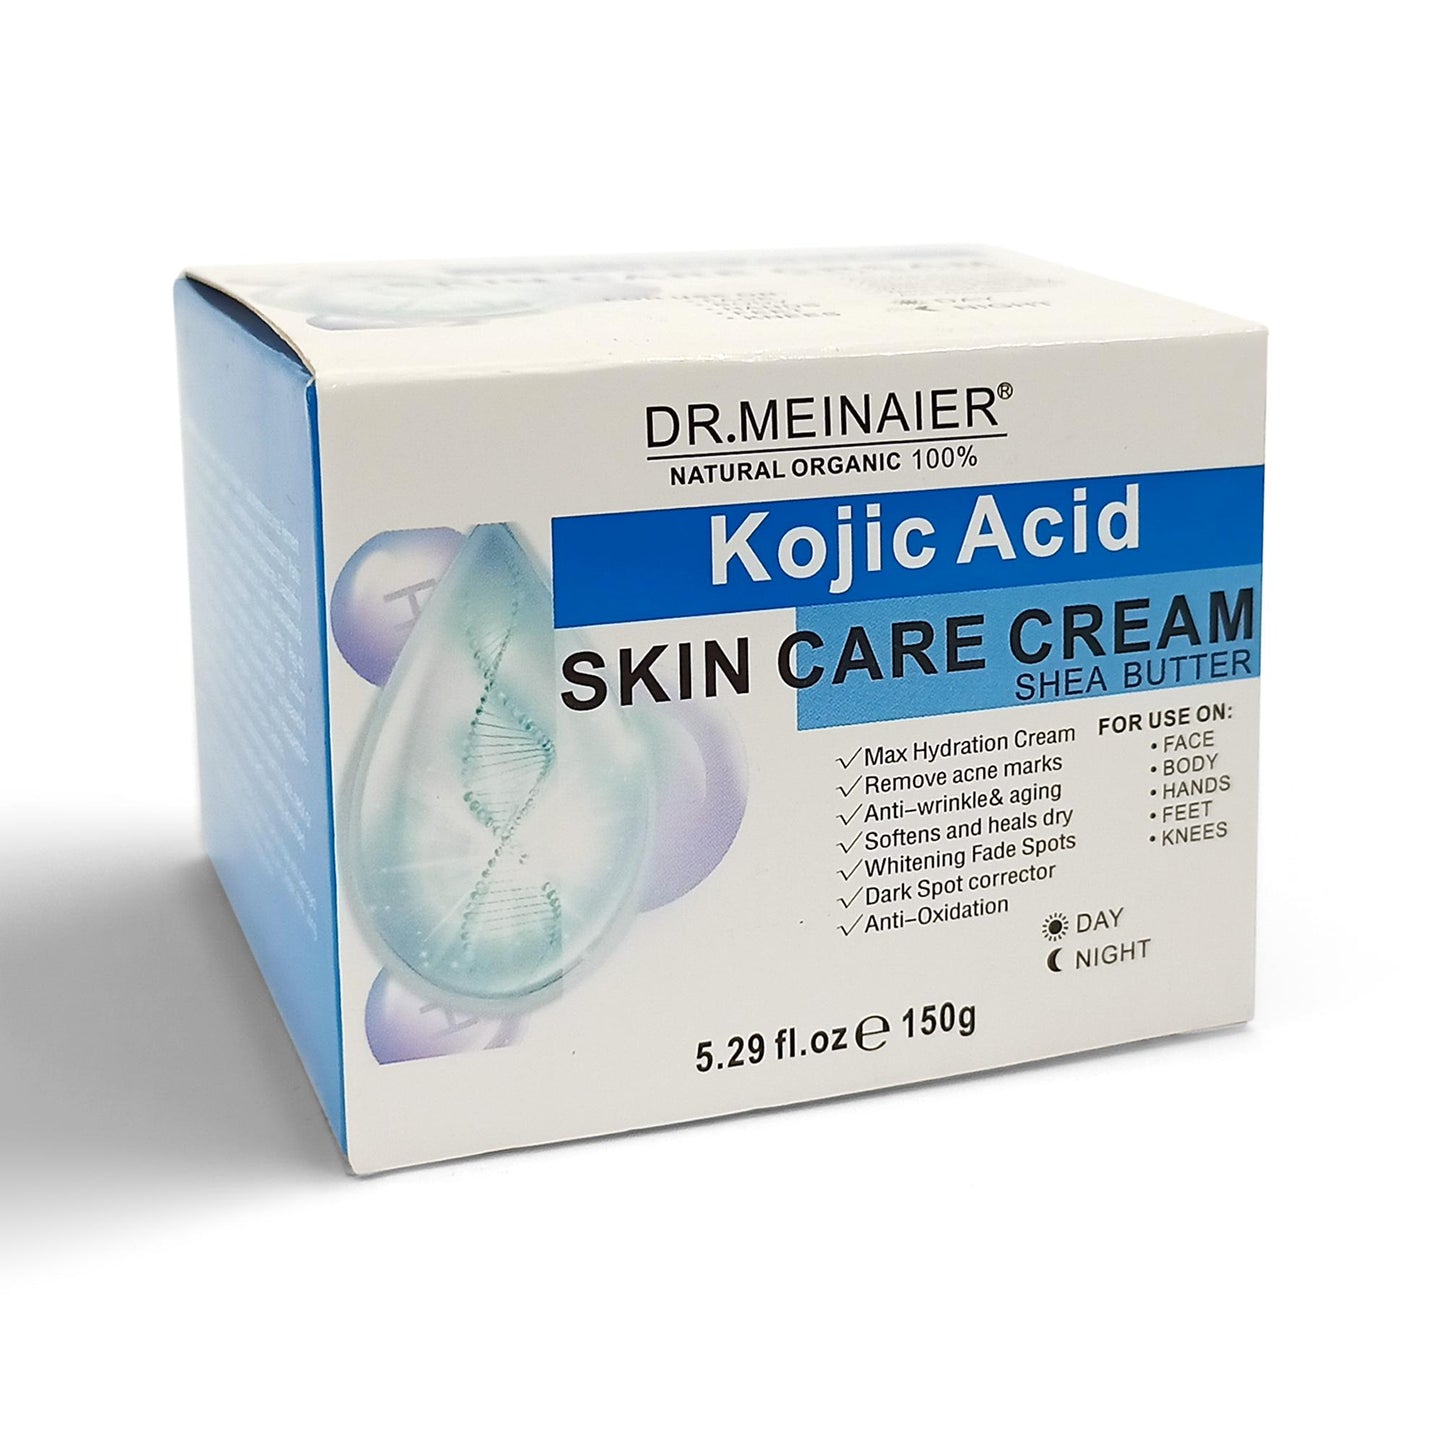 DR MEINAIER Kojic Acid Skin Care Cream - Shea Butter 150g - FlyingCart.pk